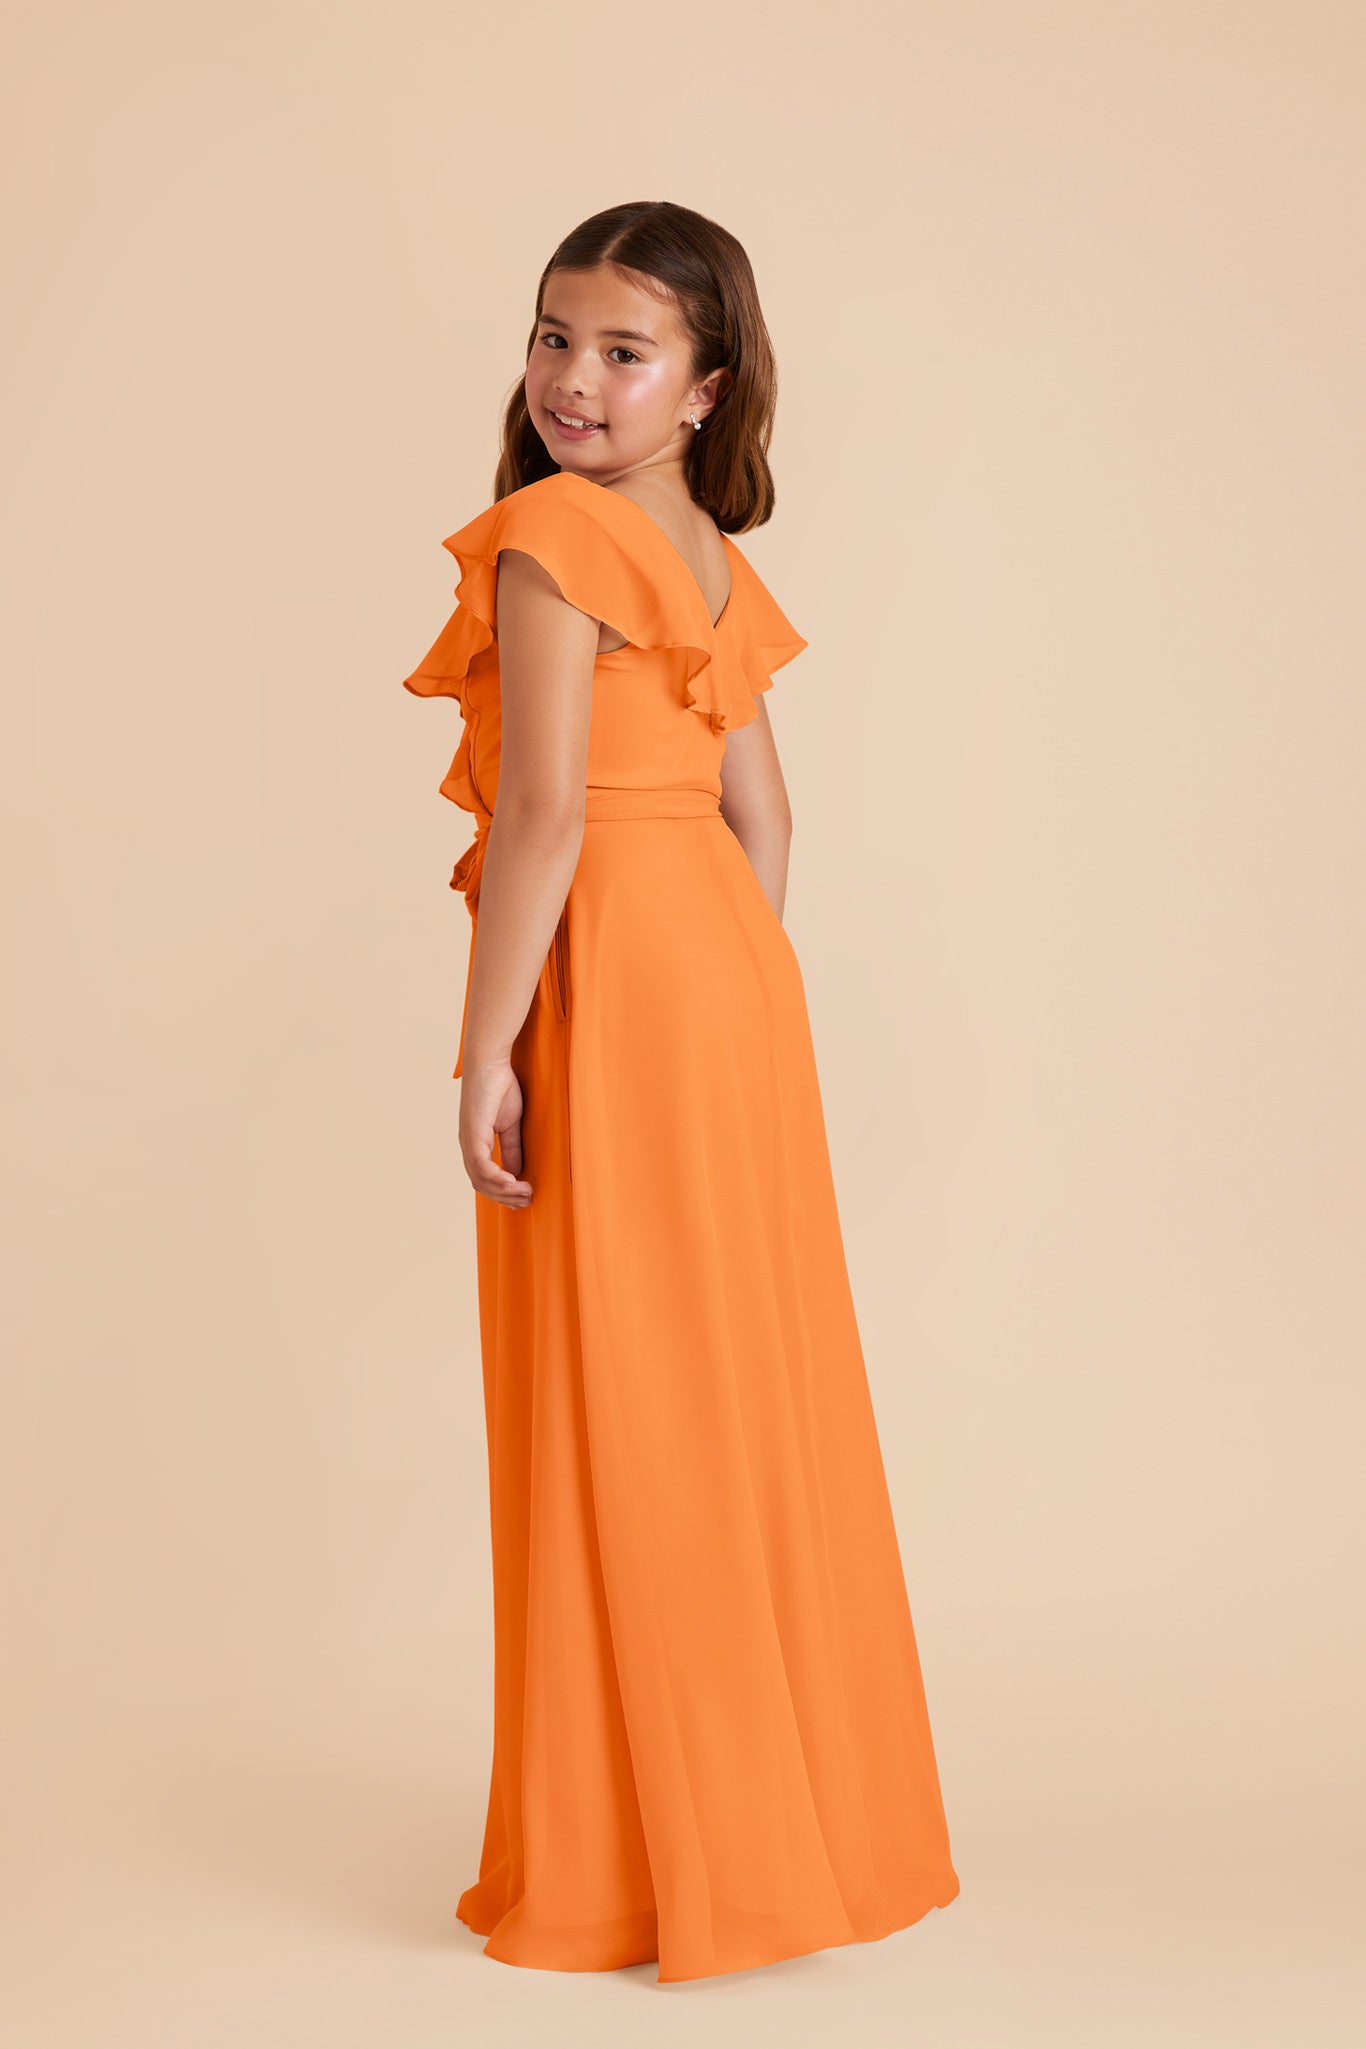 Apricot Jax Junior Chiffon Dress by Birdy Grey